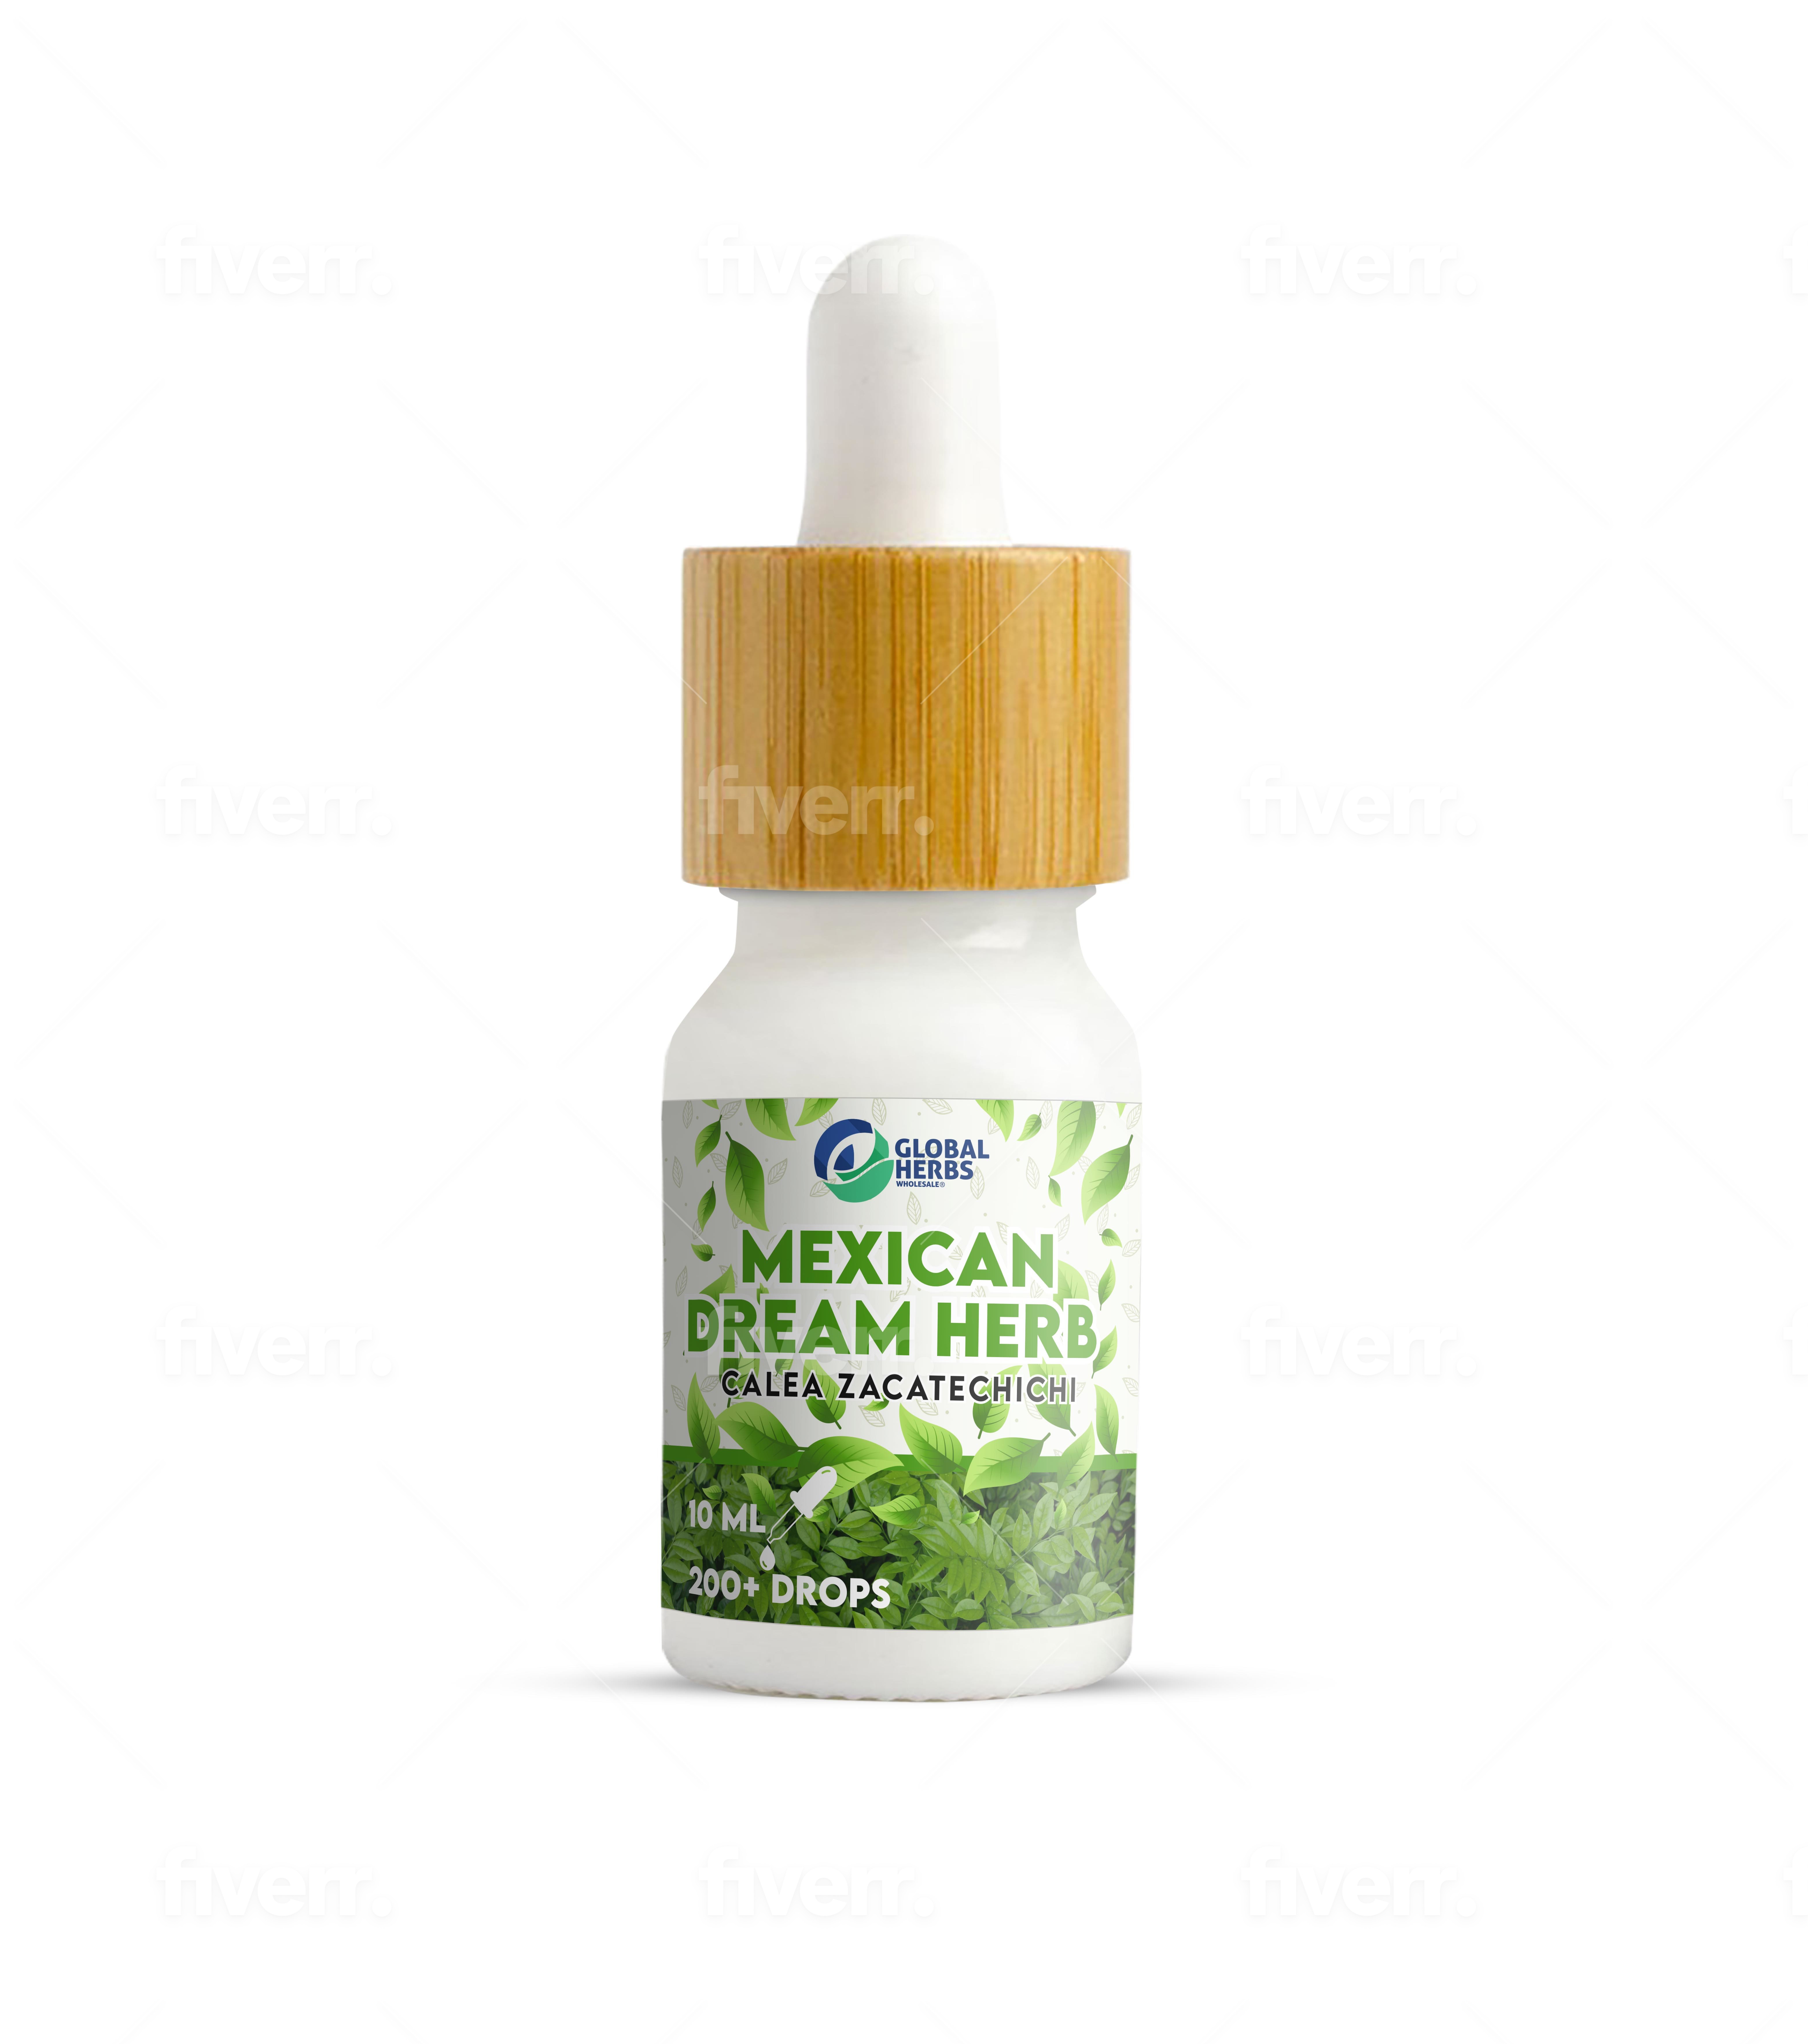 Dream herb - Calea zacatechichi alkaloide extract